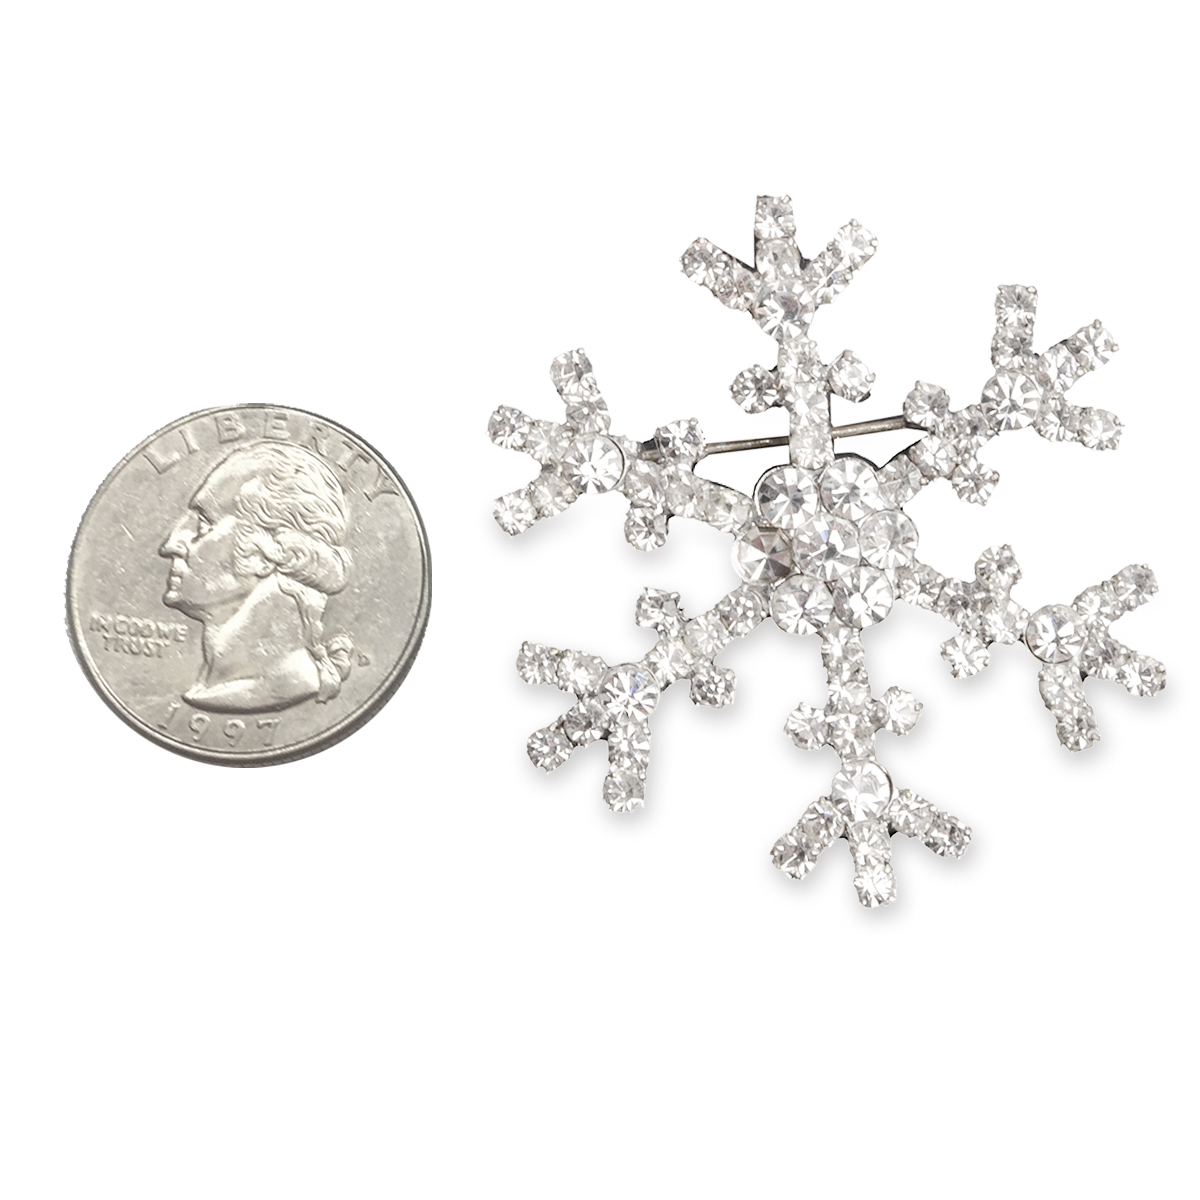 Vintage snowflake Pin